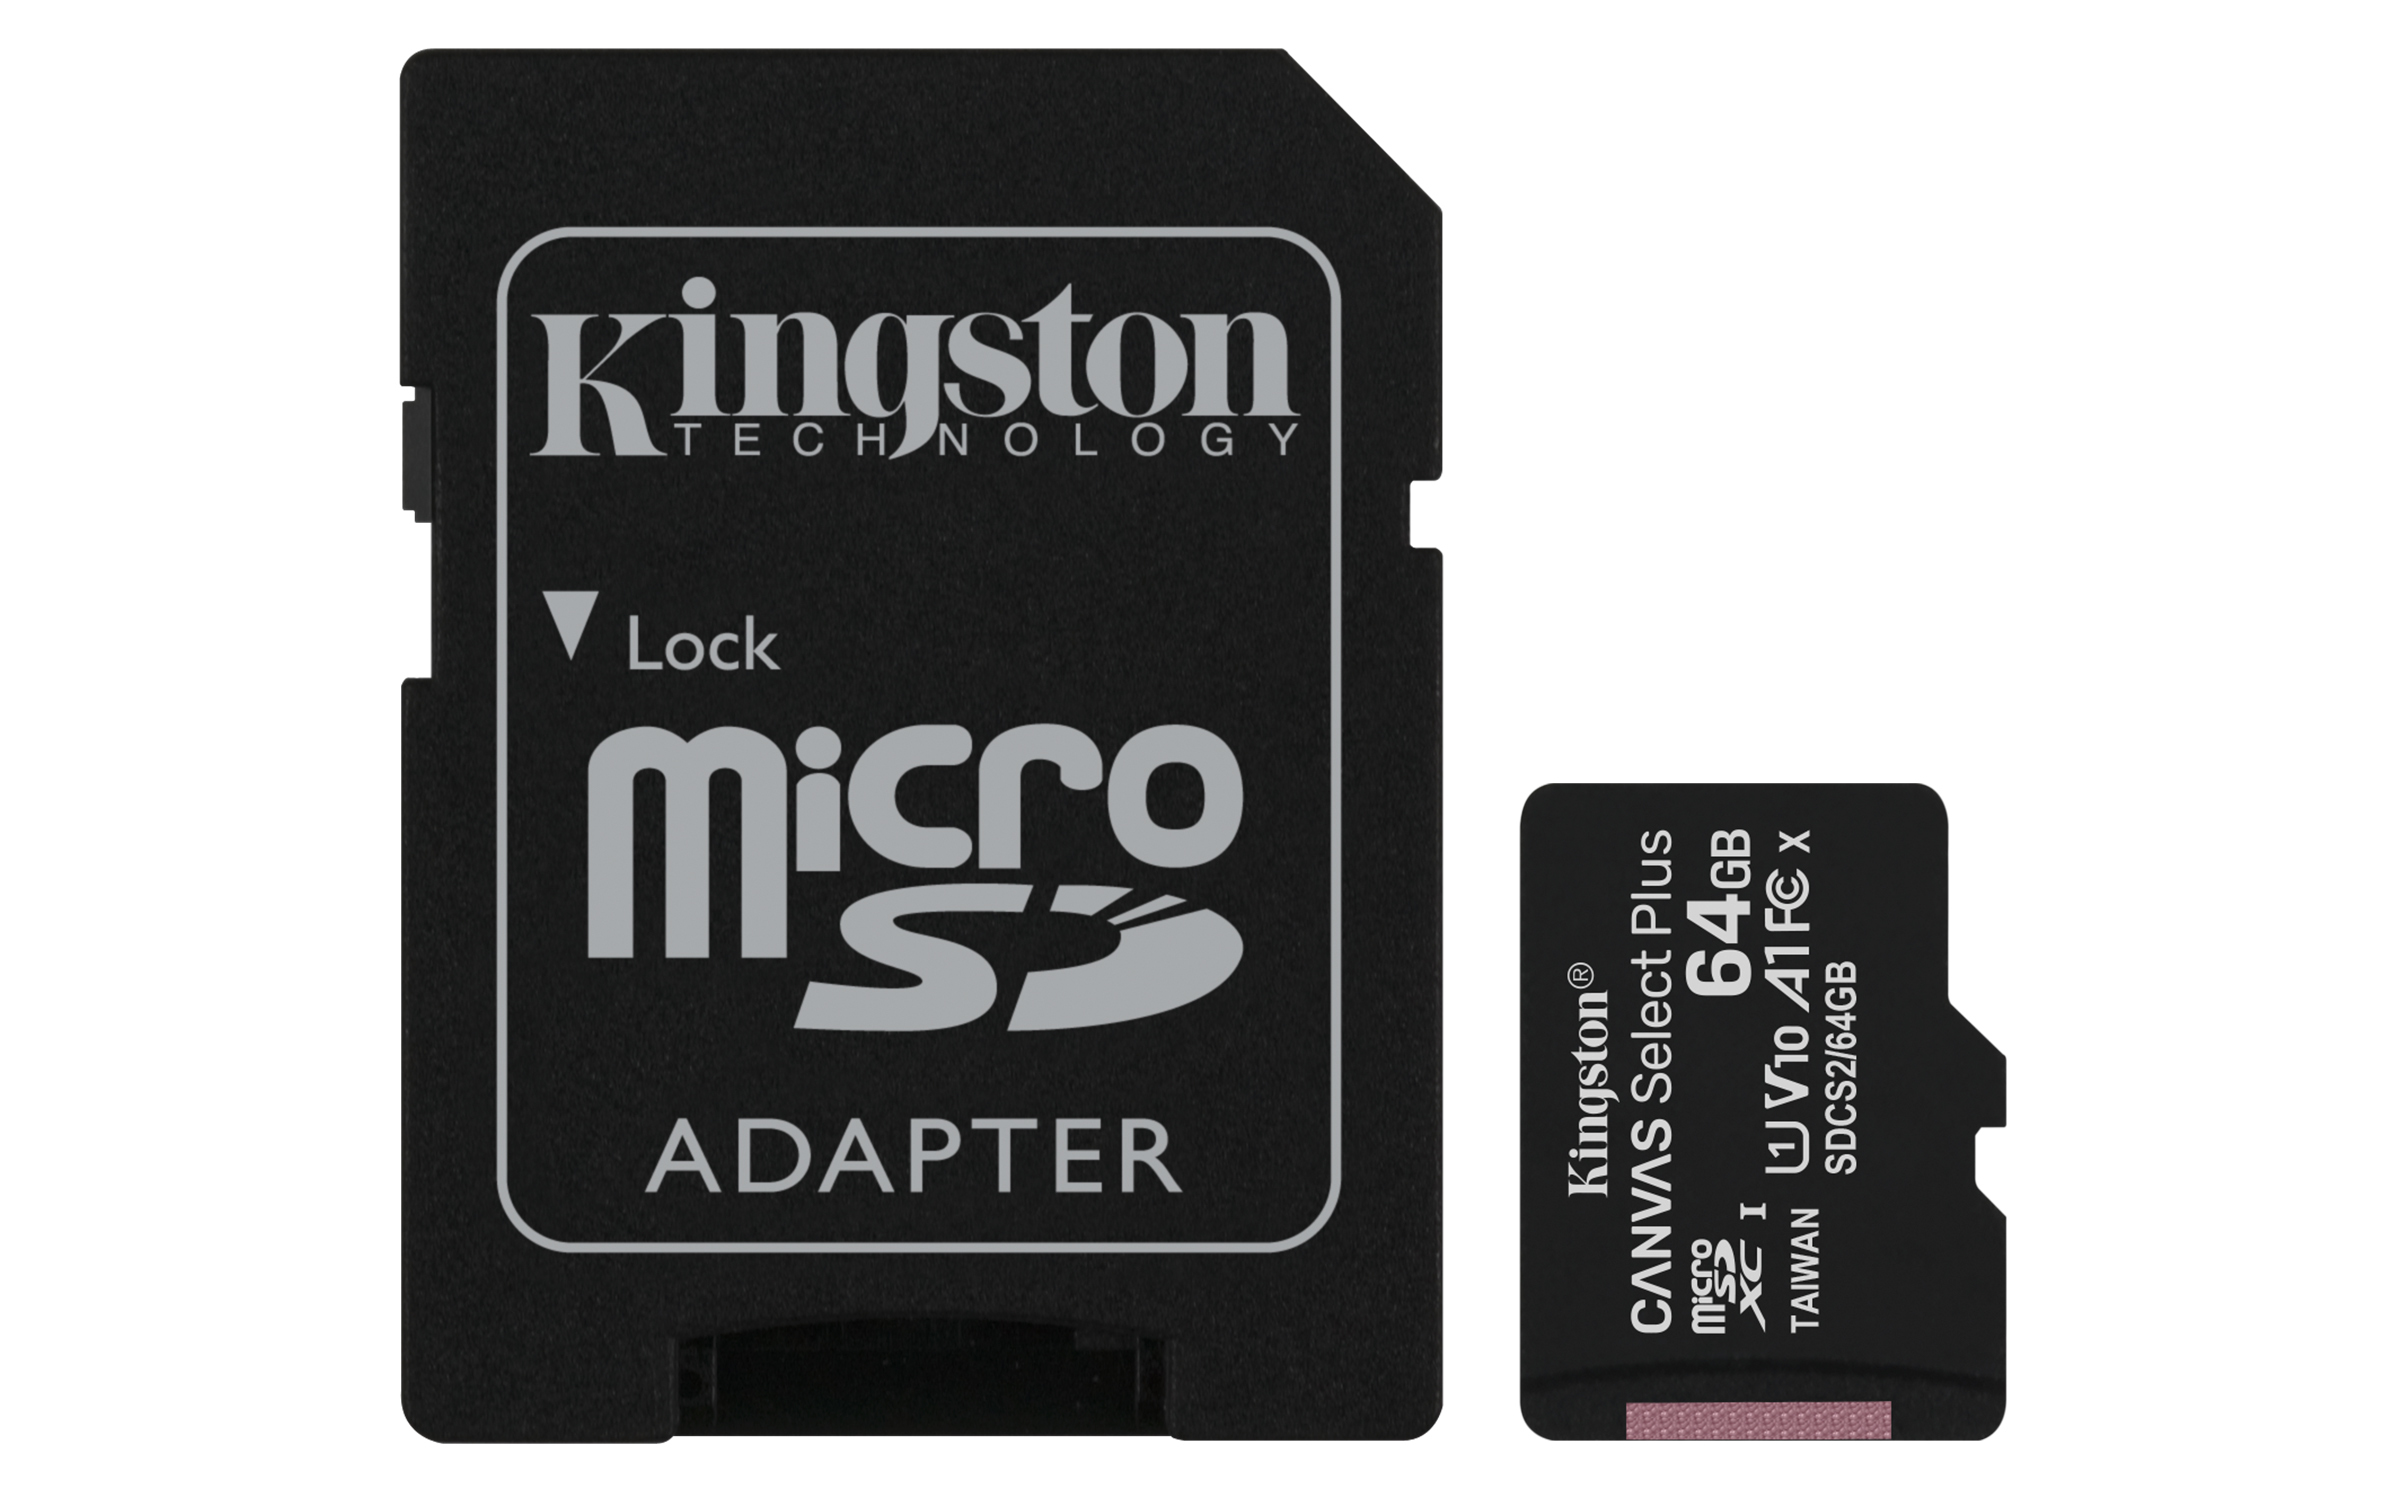 64GB micSDXC Canvas Select Plus 100R A1C10 Card + ADP